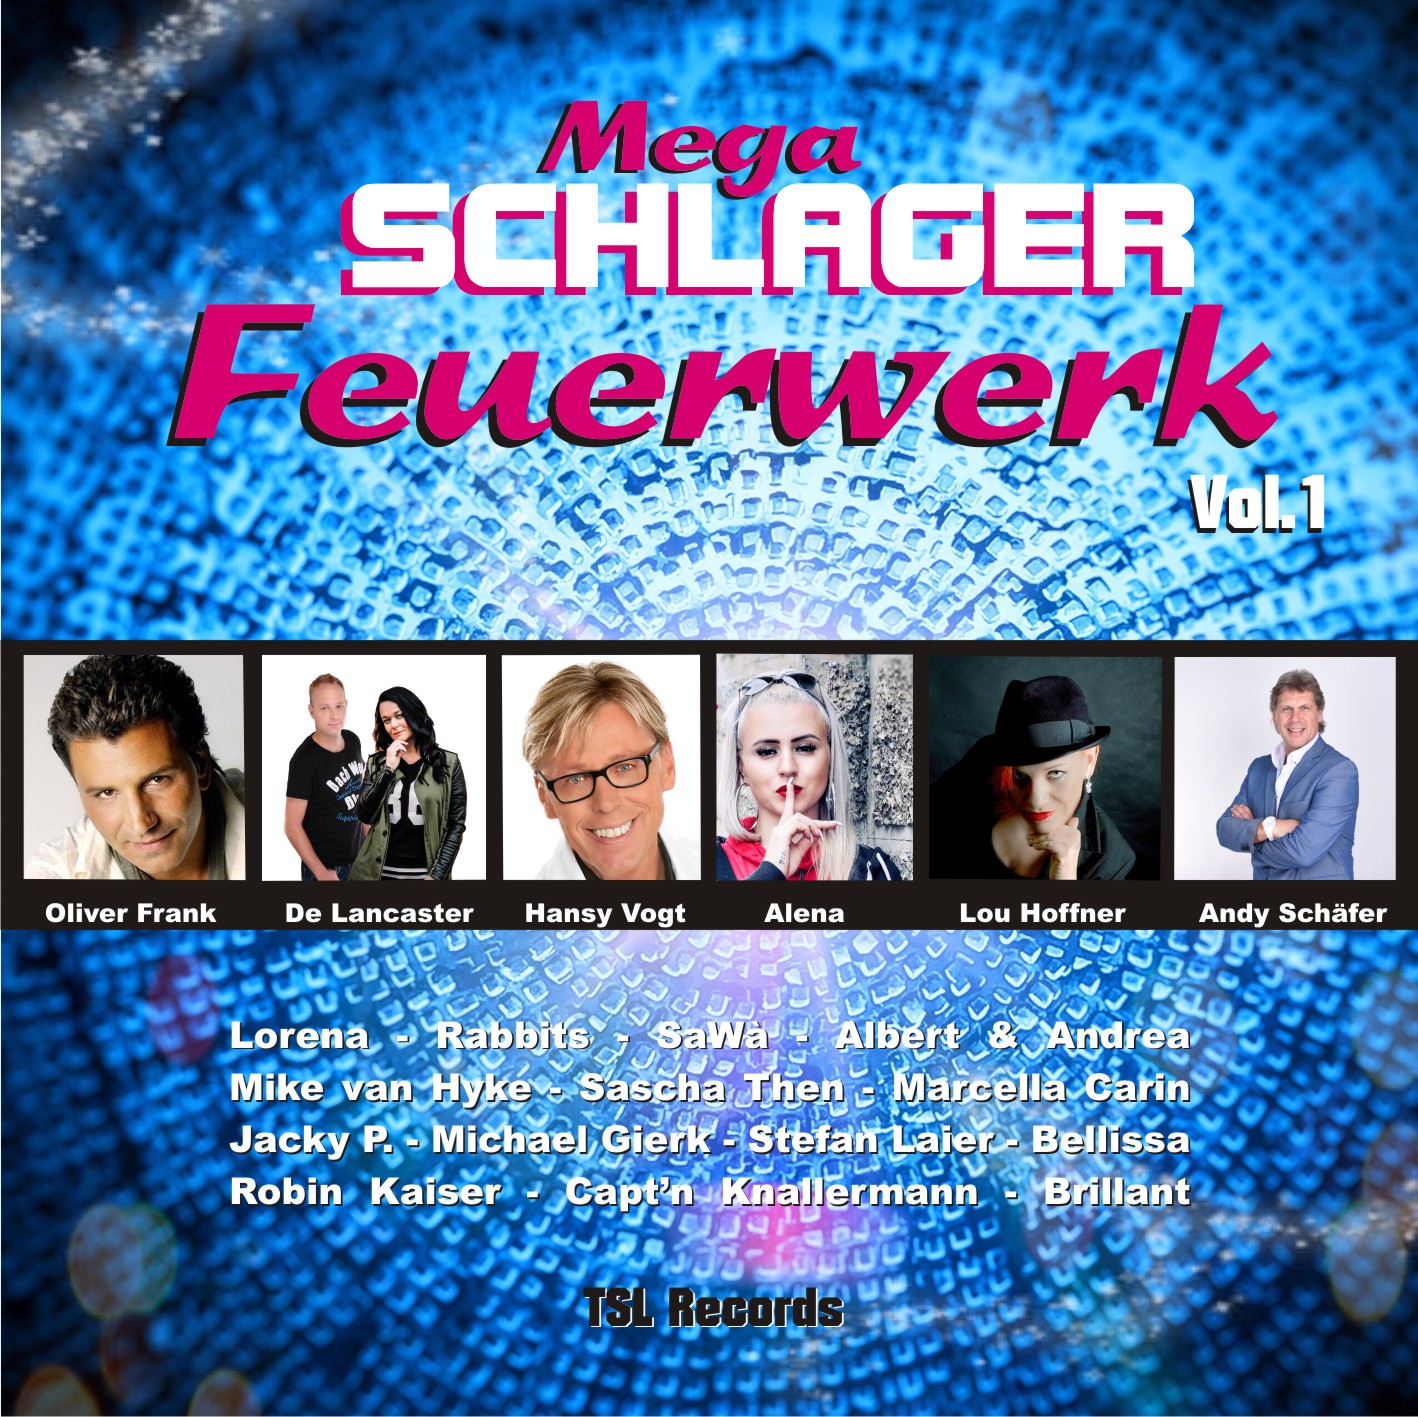 Mega Schlager Feuerwerk Vol 1 Covercard.jpg